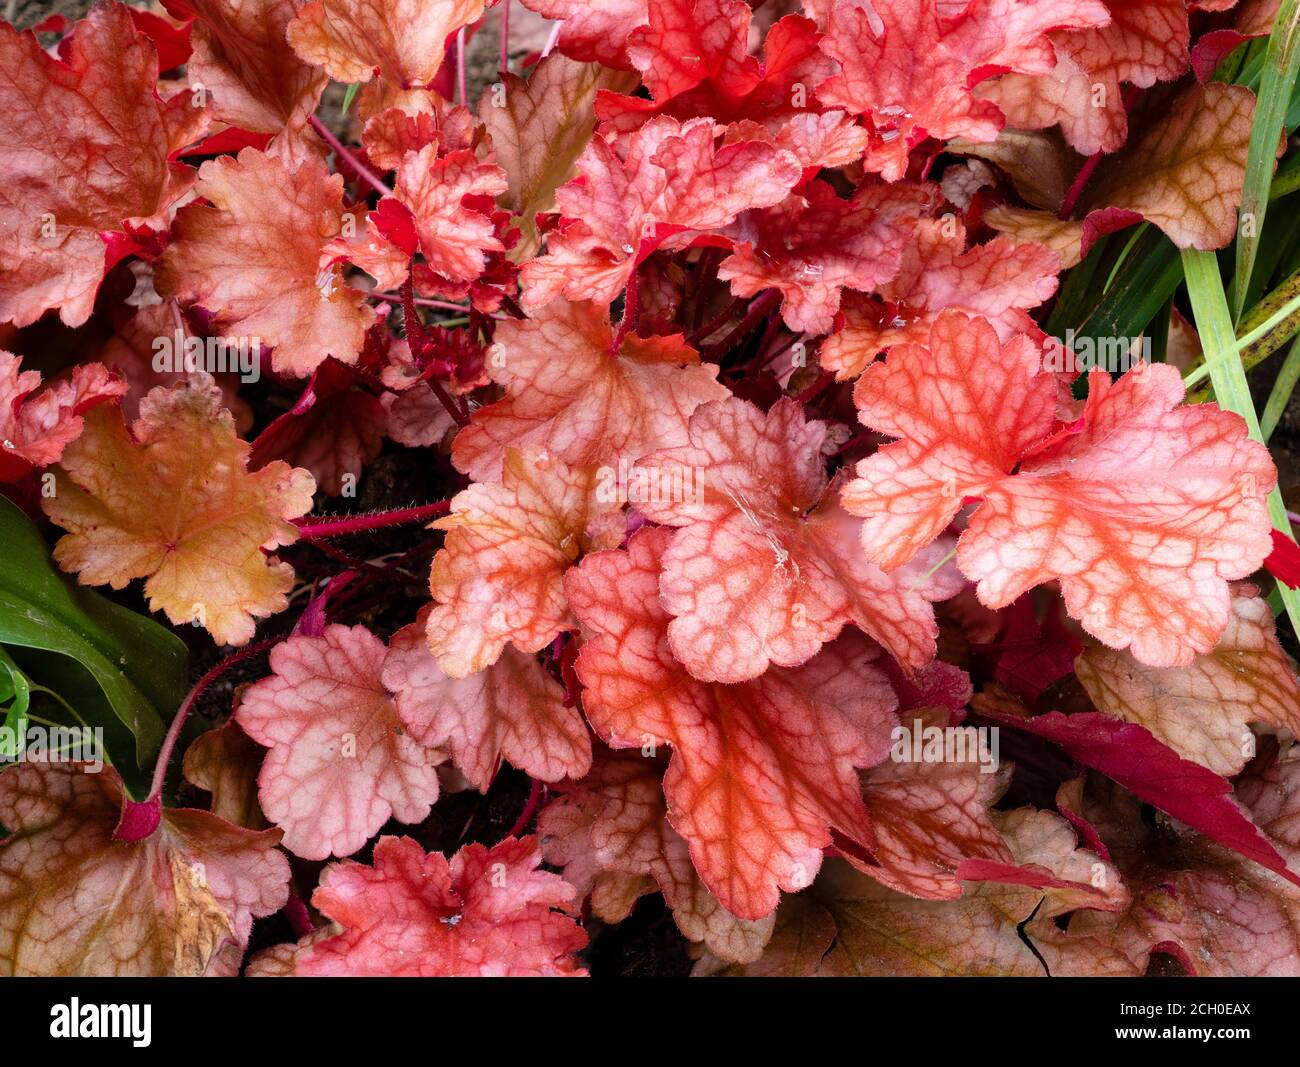 Red veined foliage of the hardy perennial evergreen ground cover, Heuchera 'Peach Flambe' Stock Photo